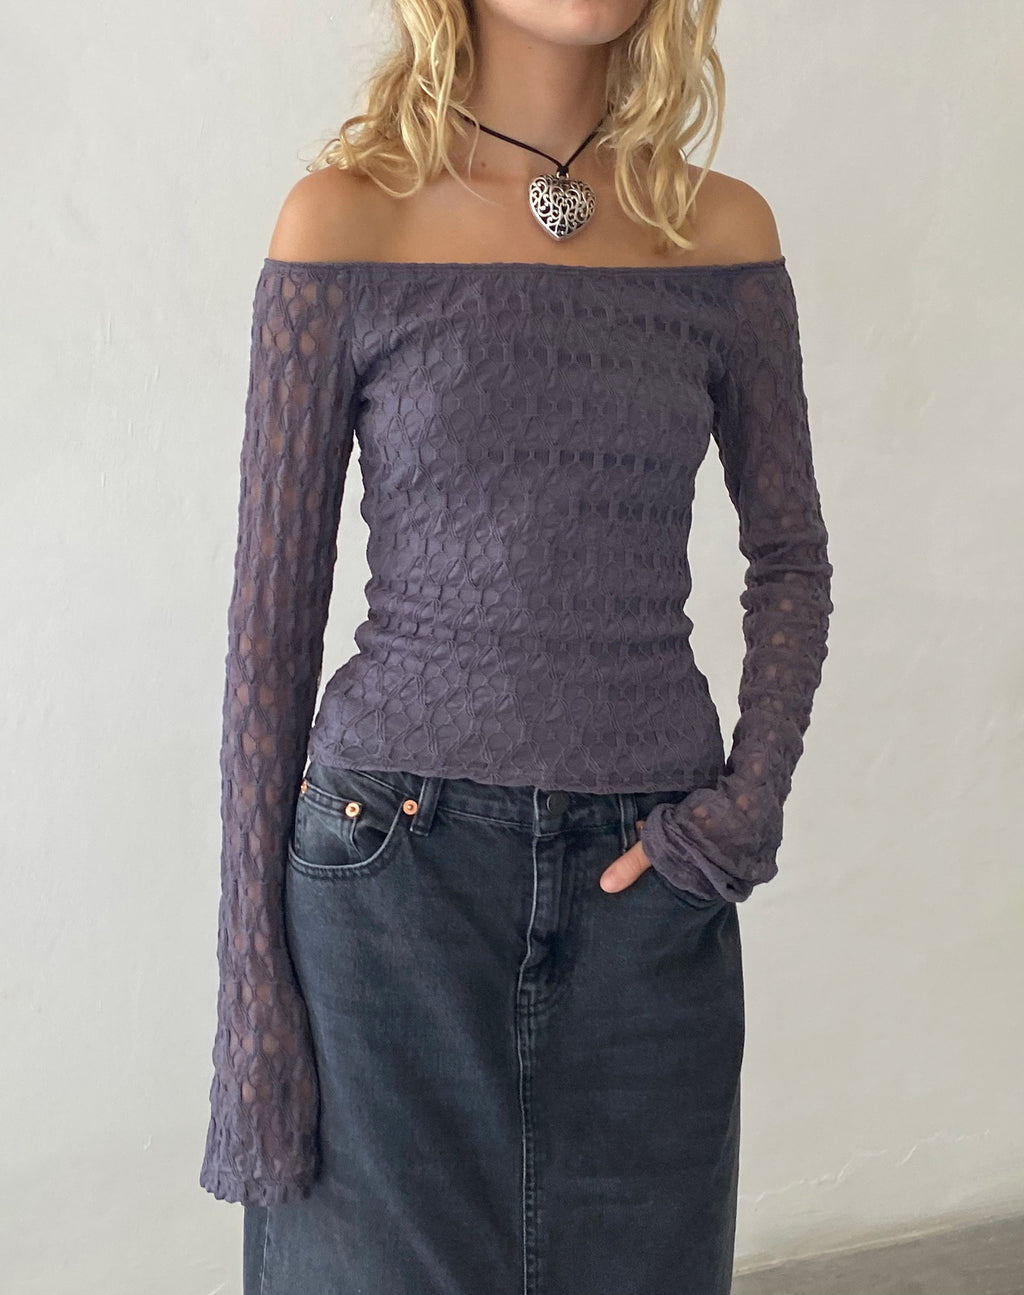 Neira Long Sleeve Bardot Top in Textured Knit Ocean Storm